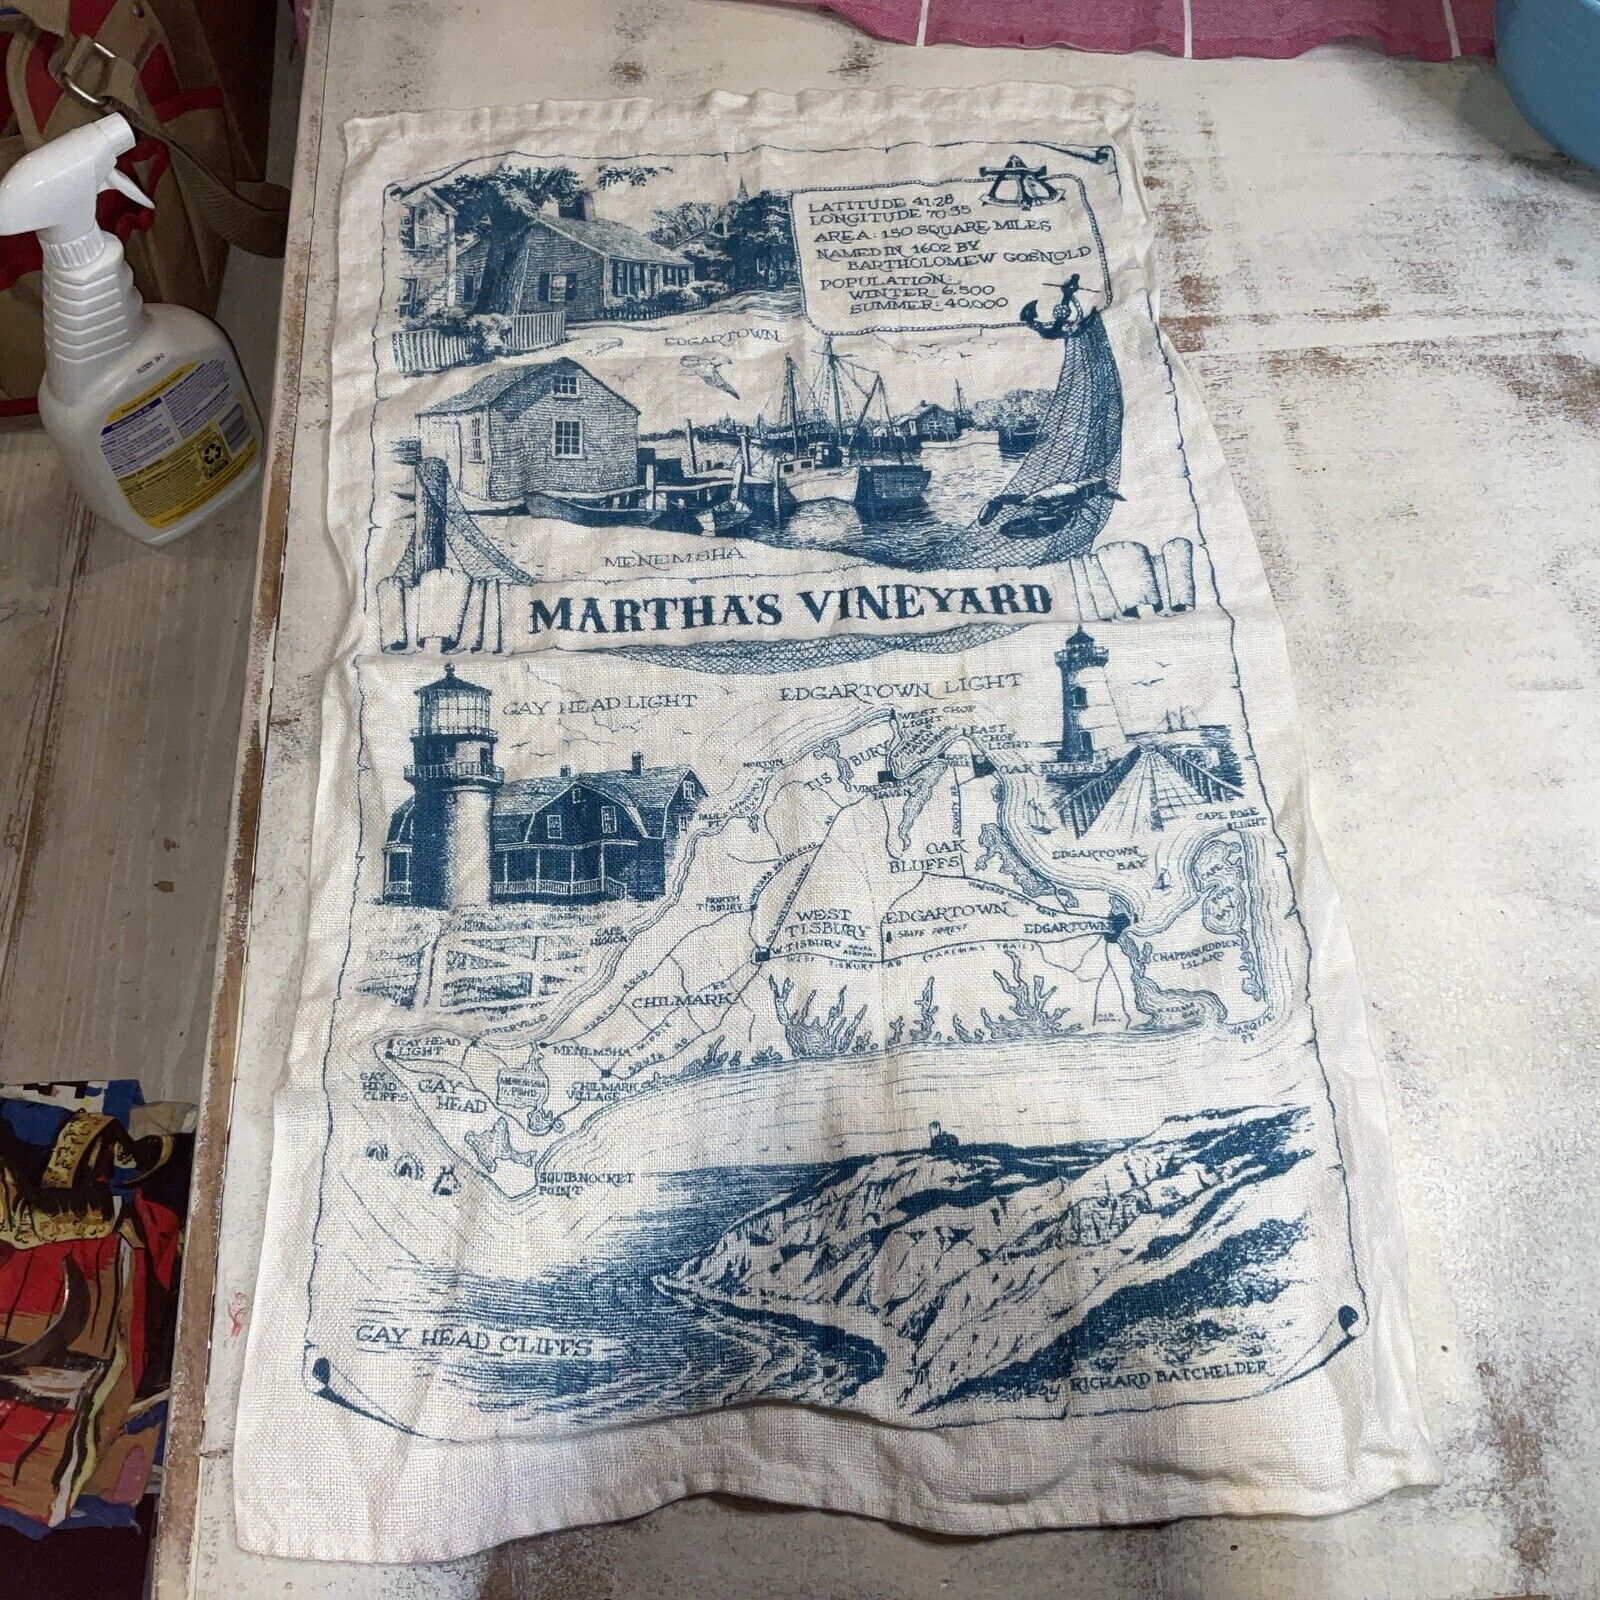 DESIGNER MARTHA’S VINEYARD 16” BY 26” PRE-OWNED TEA TOWEL VINTAGE TEXTILE MAP